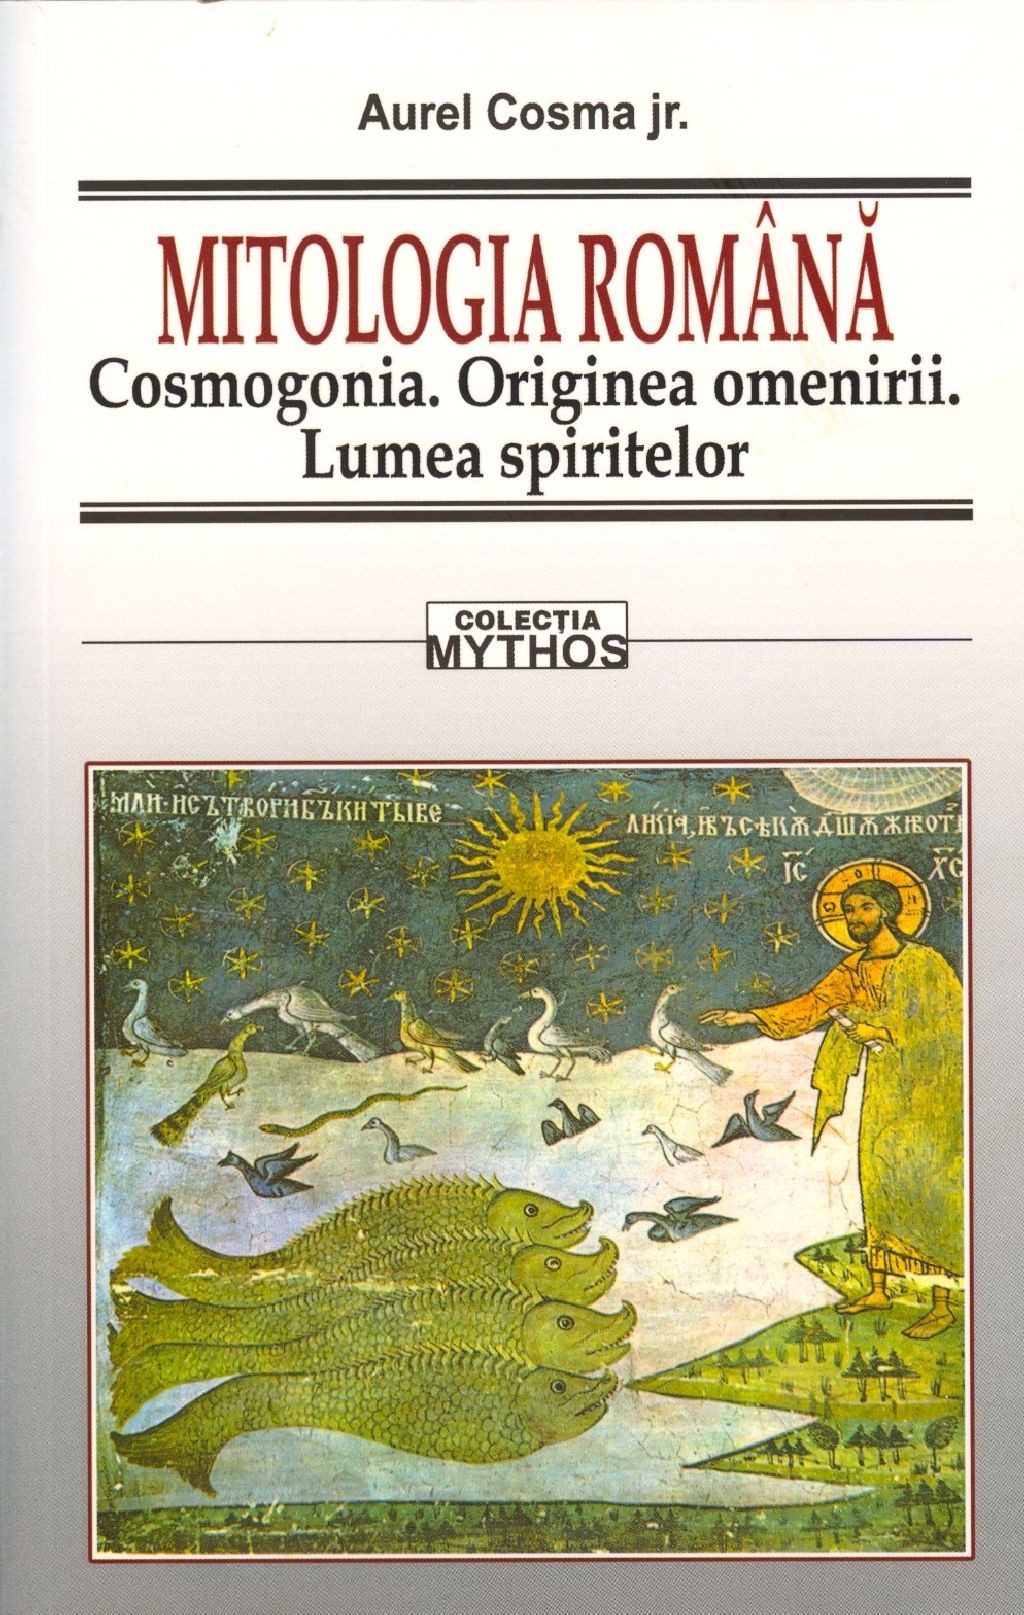 Mitologie romana